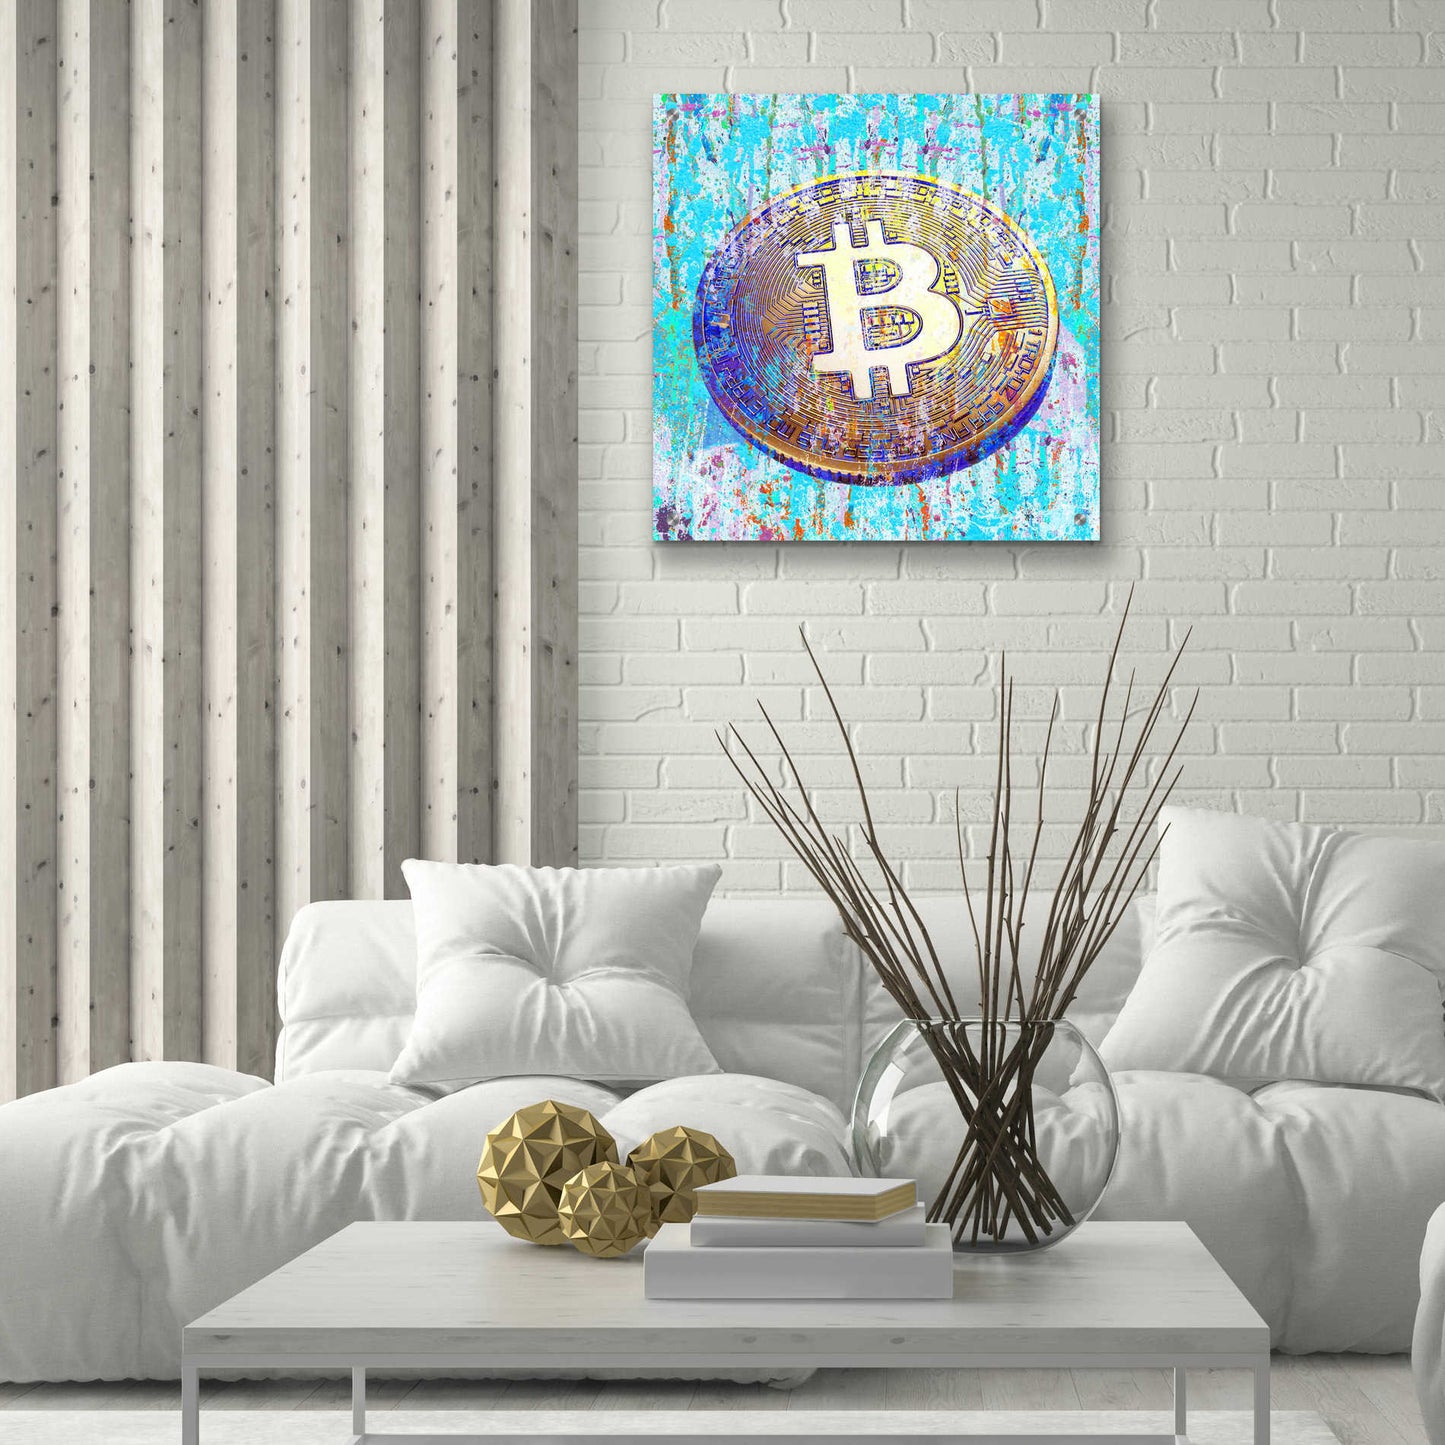 Epic Art 'The Inextinguishable Bitcoin,' Acrylic Wall Art,24x24